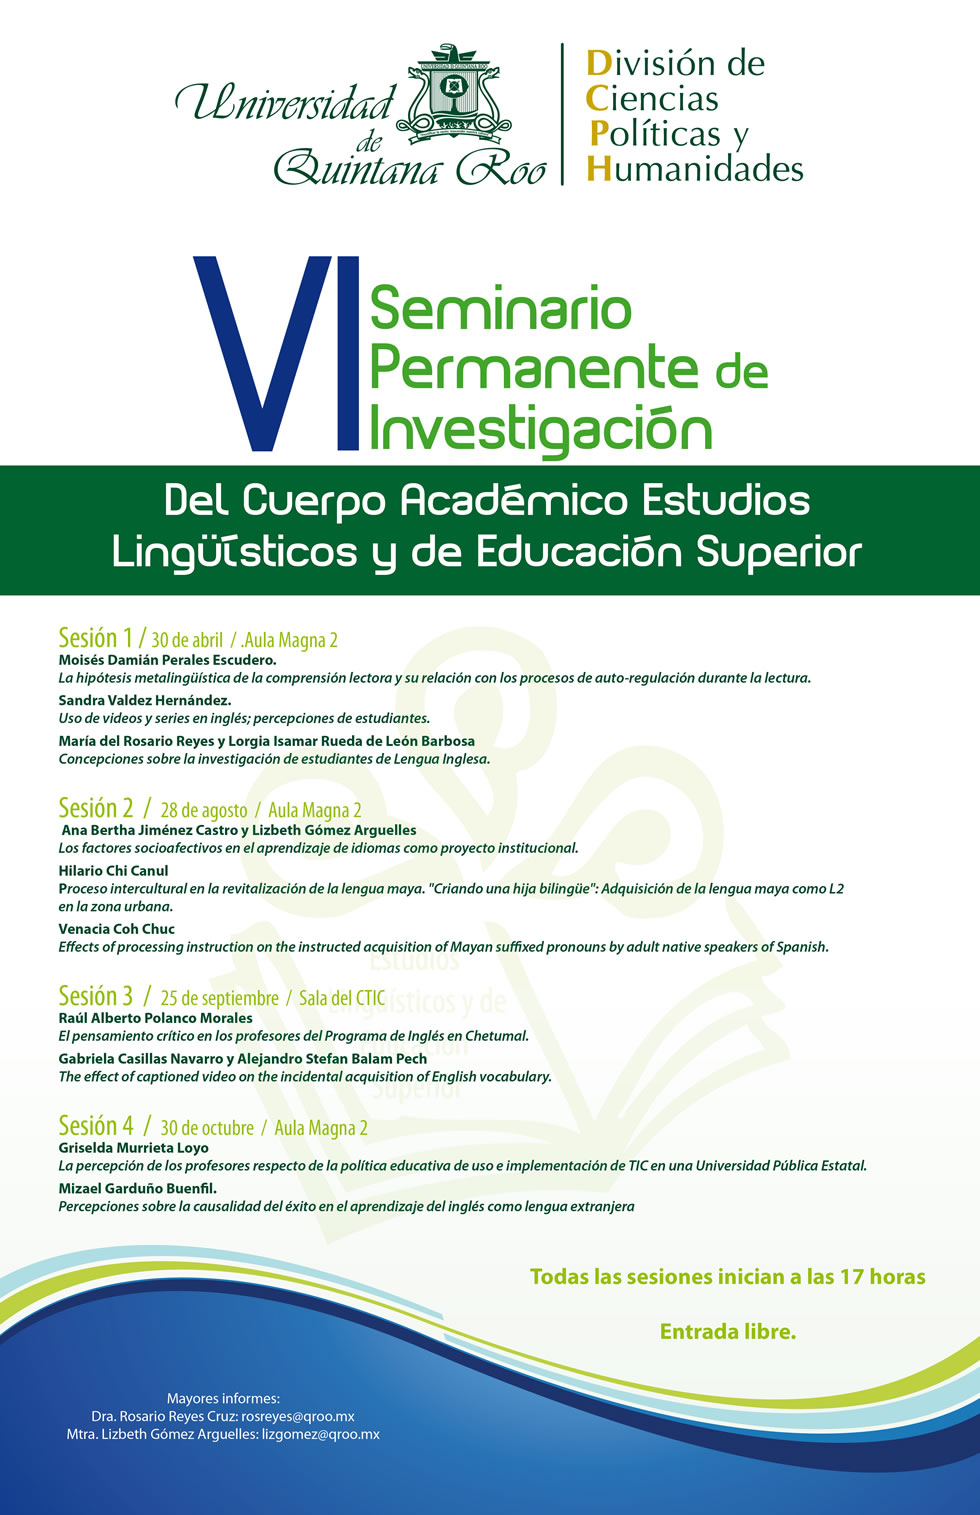 VI_seminario_permanente_de_investigacion.jpg